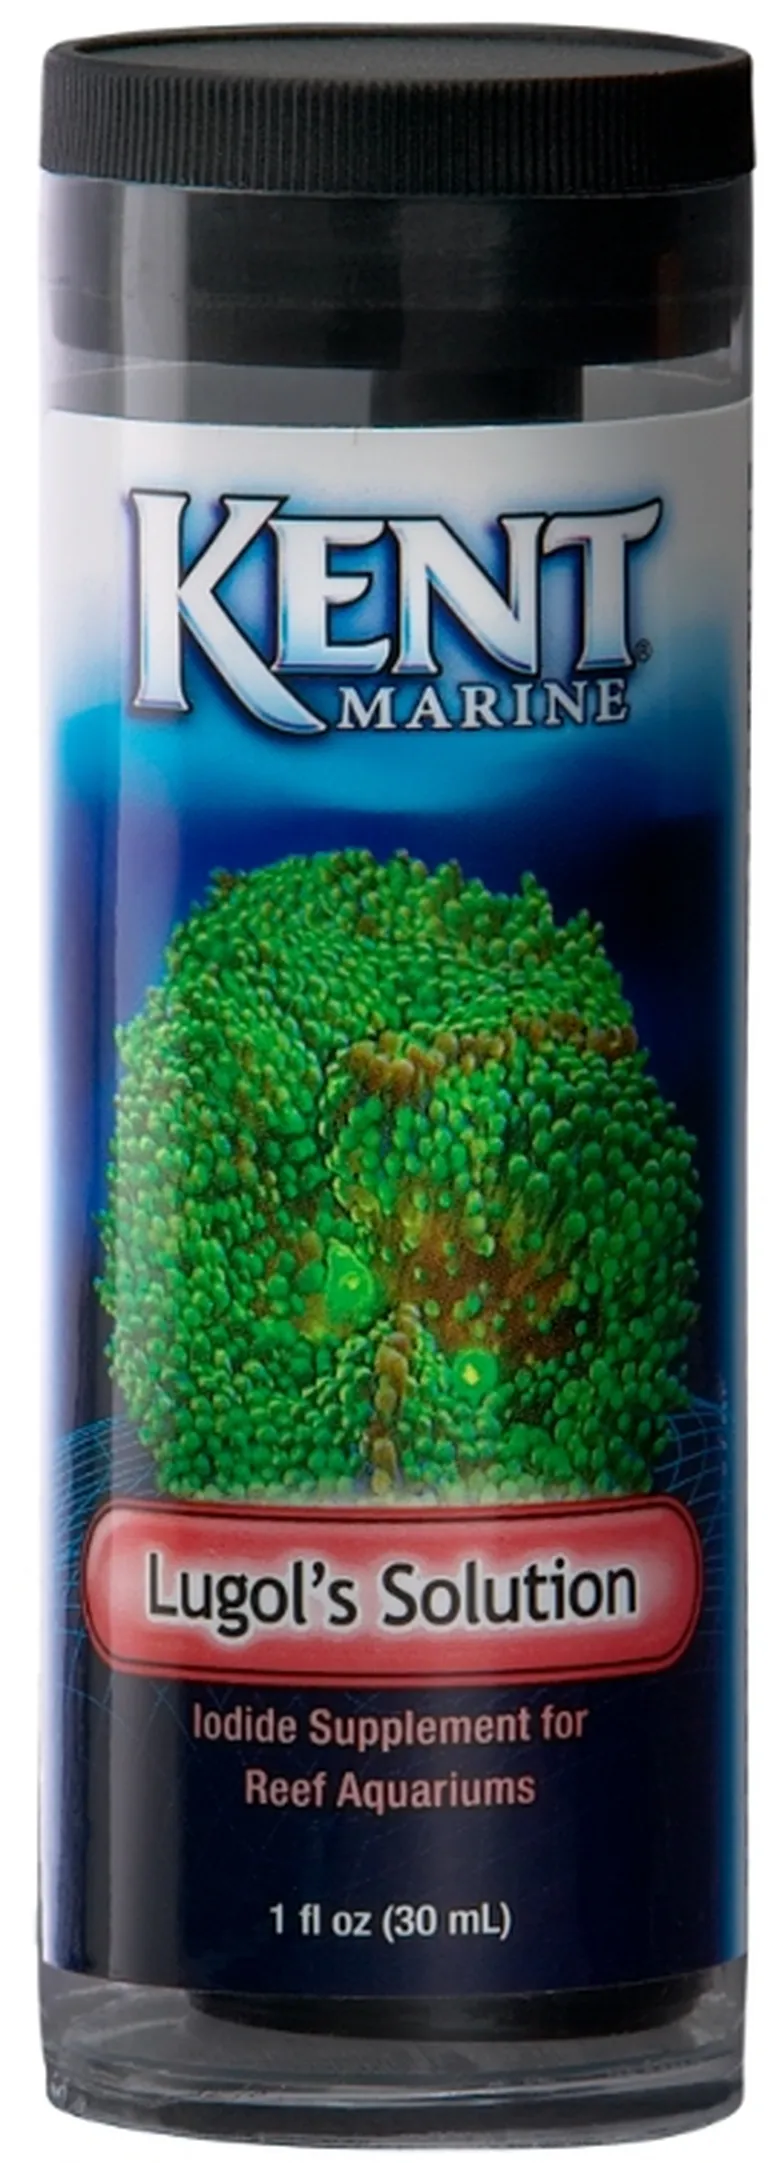 Kent Marine Lugols Solution Iodide Supplement for Reef Aquariums Photo 2